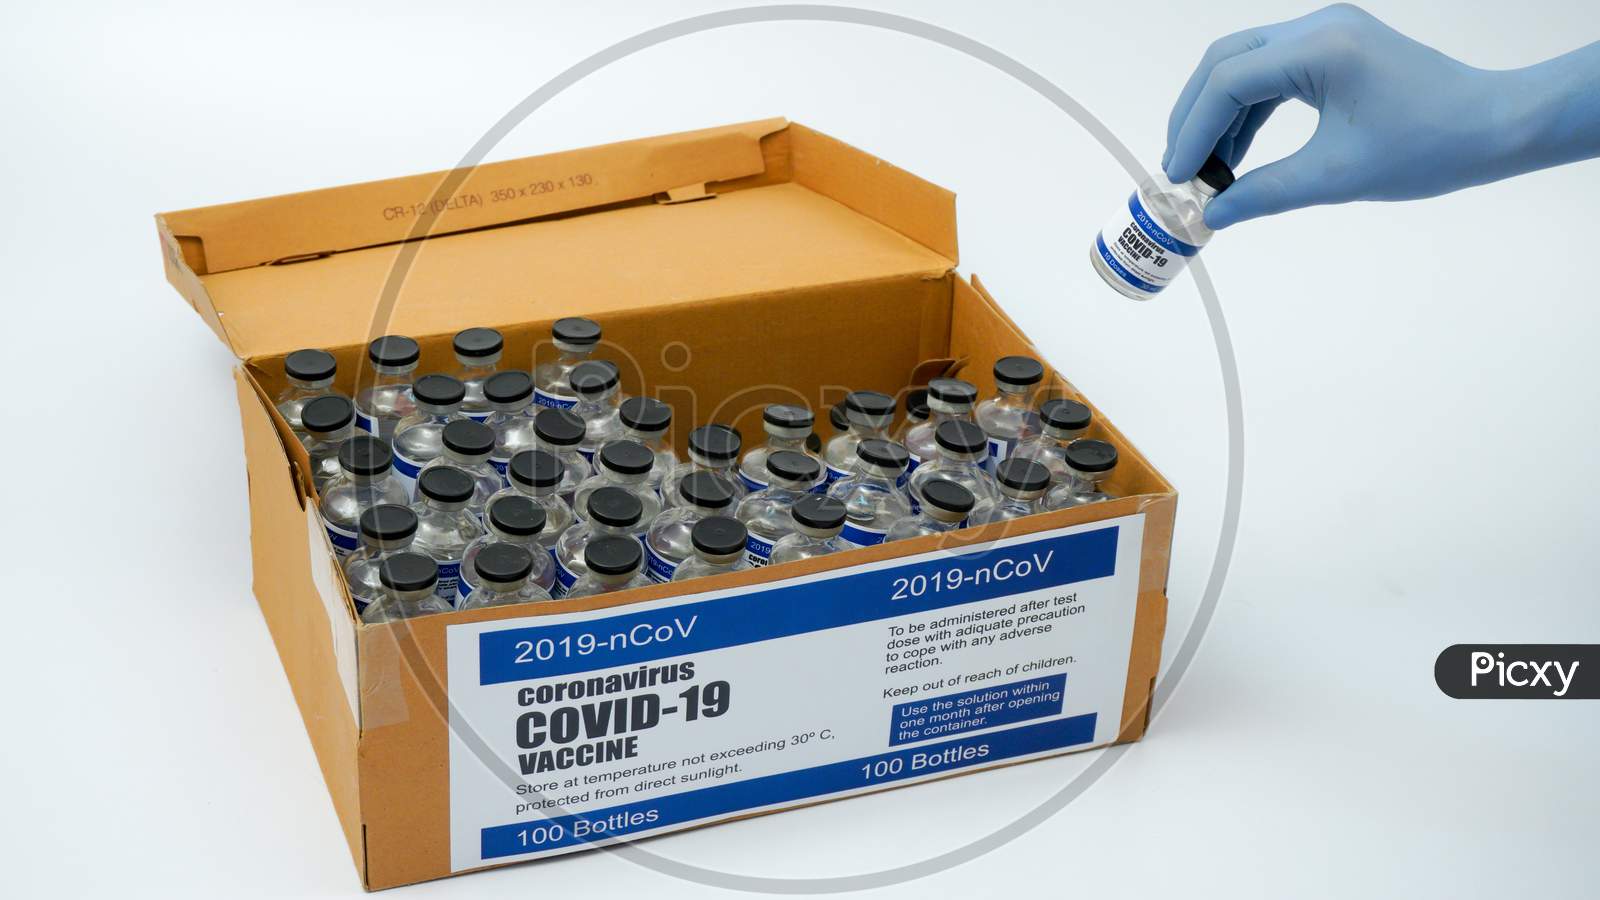 Covid-19 Corona Virus 2019-Ncov Vaccine Vials Medicine Drug Bottles Injection Blue Nitrile Surgical Gloves Box. Vaccination, Immunization, Treatment To Cure Covid 19 Corona Virus Infection Concept.